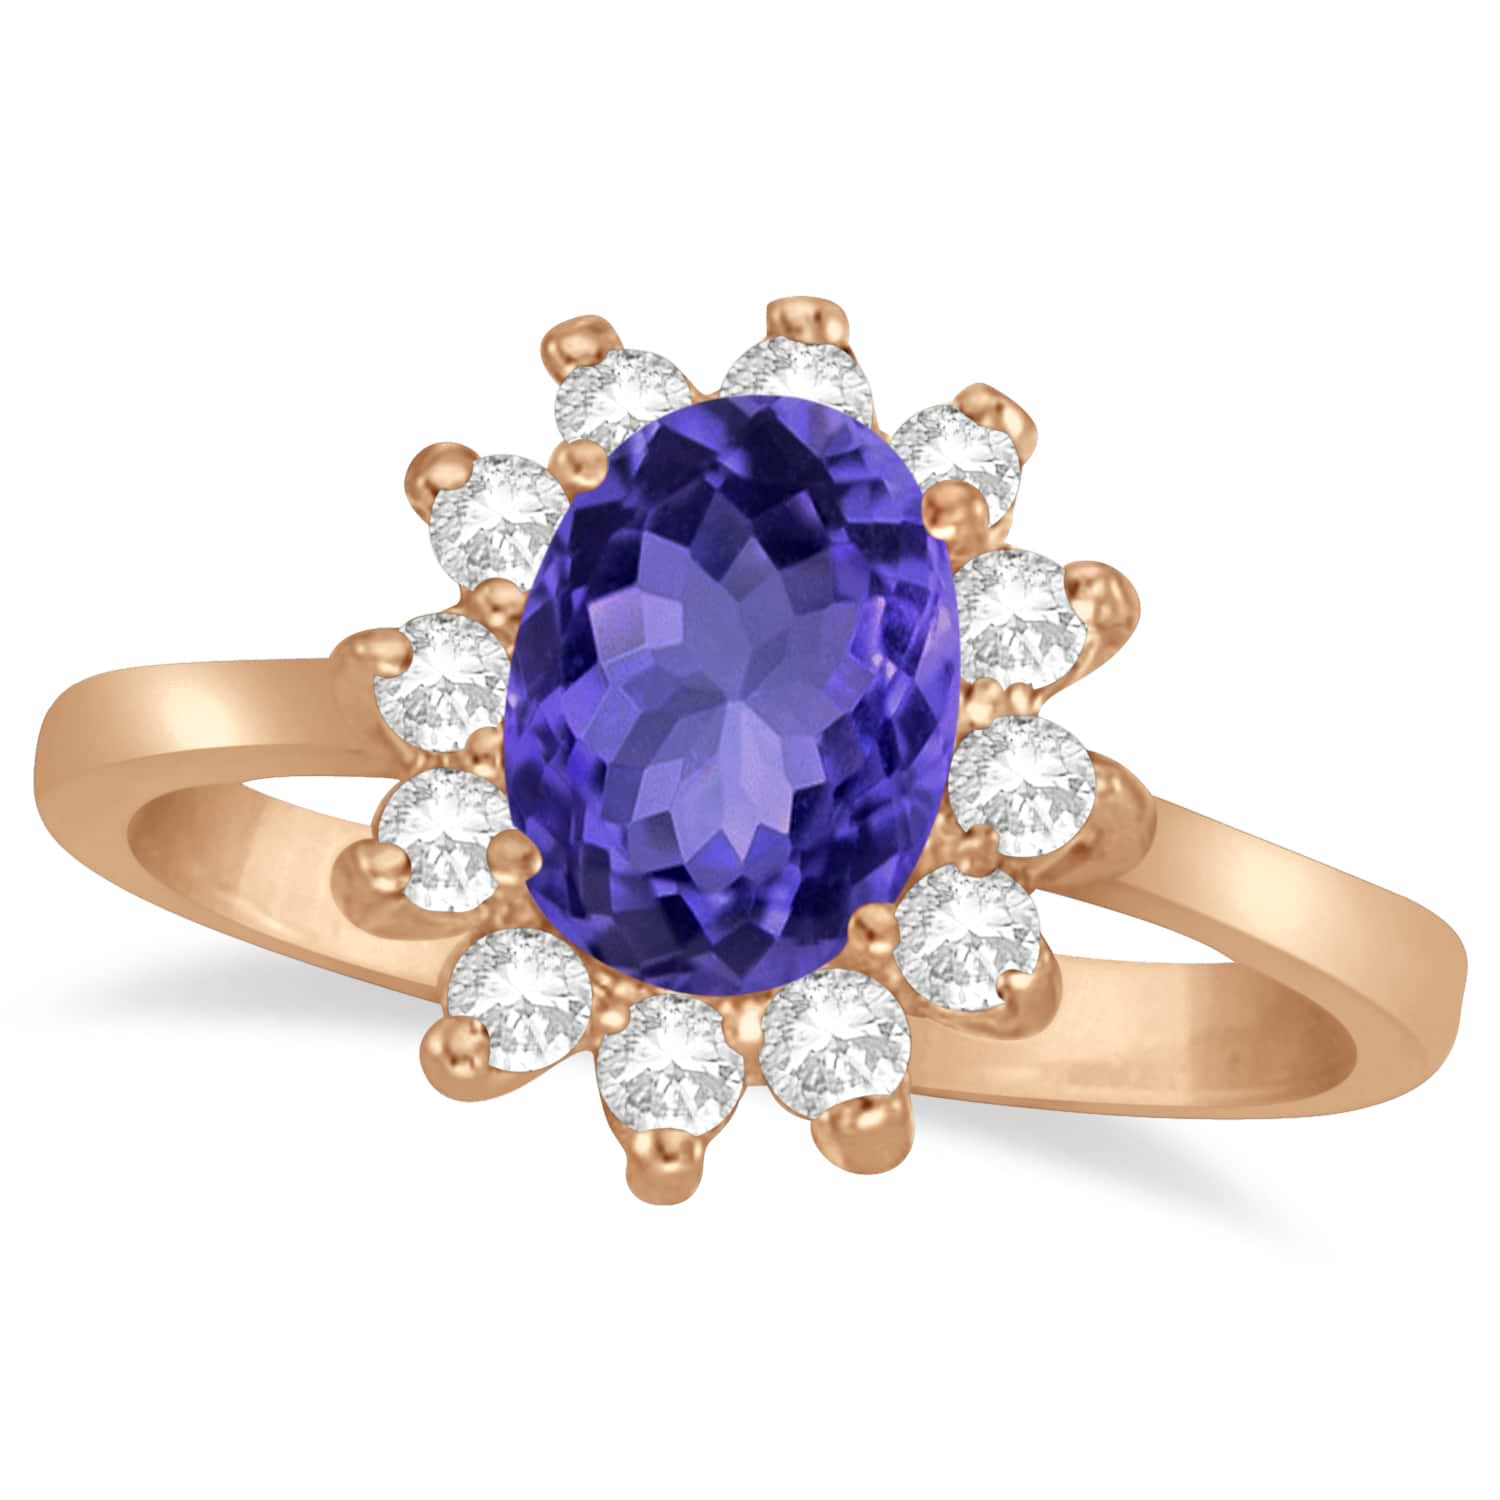 Lady Diana Oval Tanzanite & Diamond Ring 14k Rose Gold (1.50 ctw)